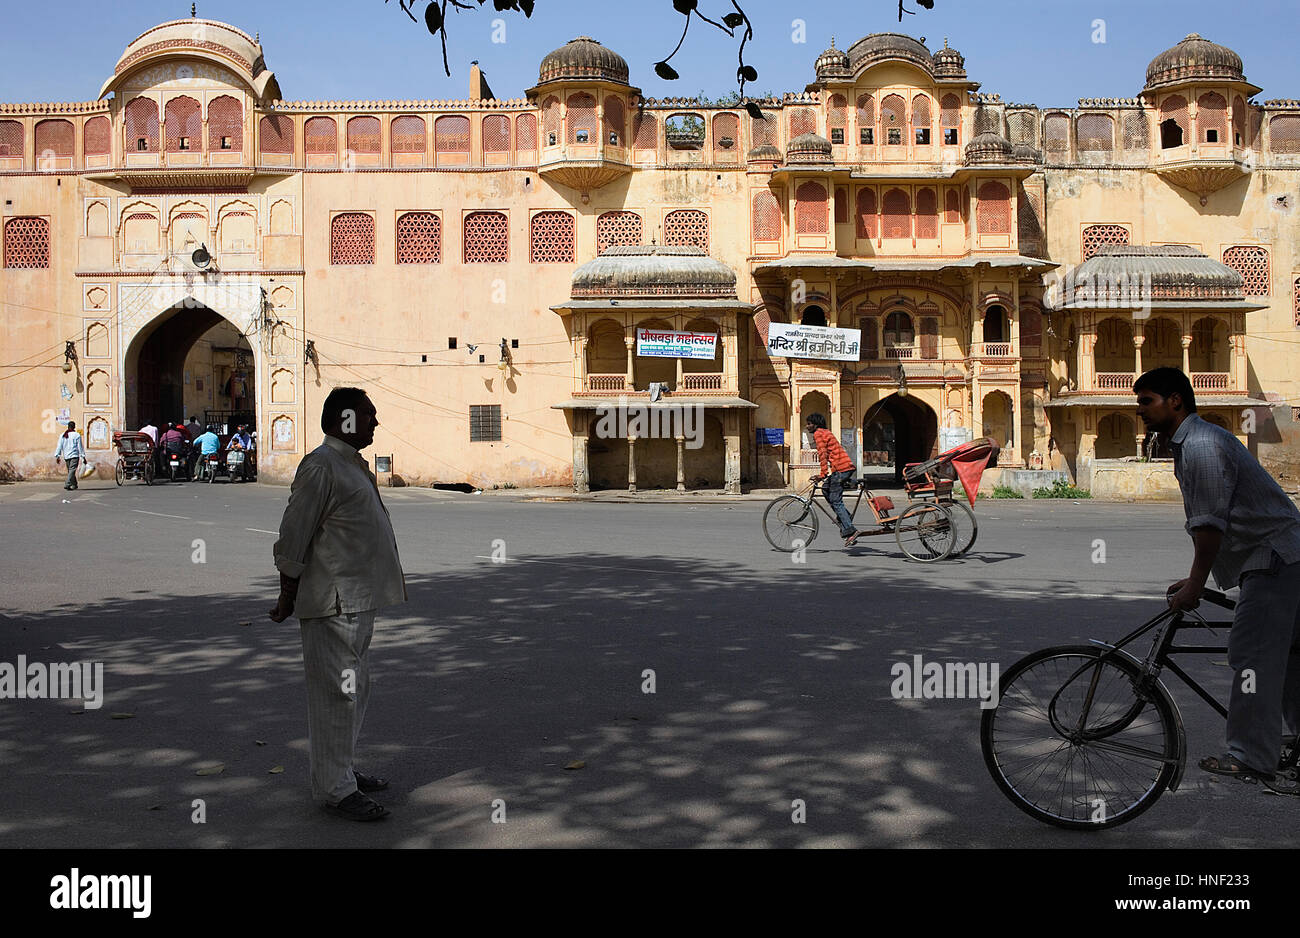 Street scene in Old city, near City Palace, Jaipur, Rajasthan, India Stock Photo